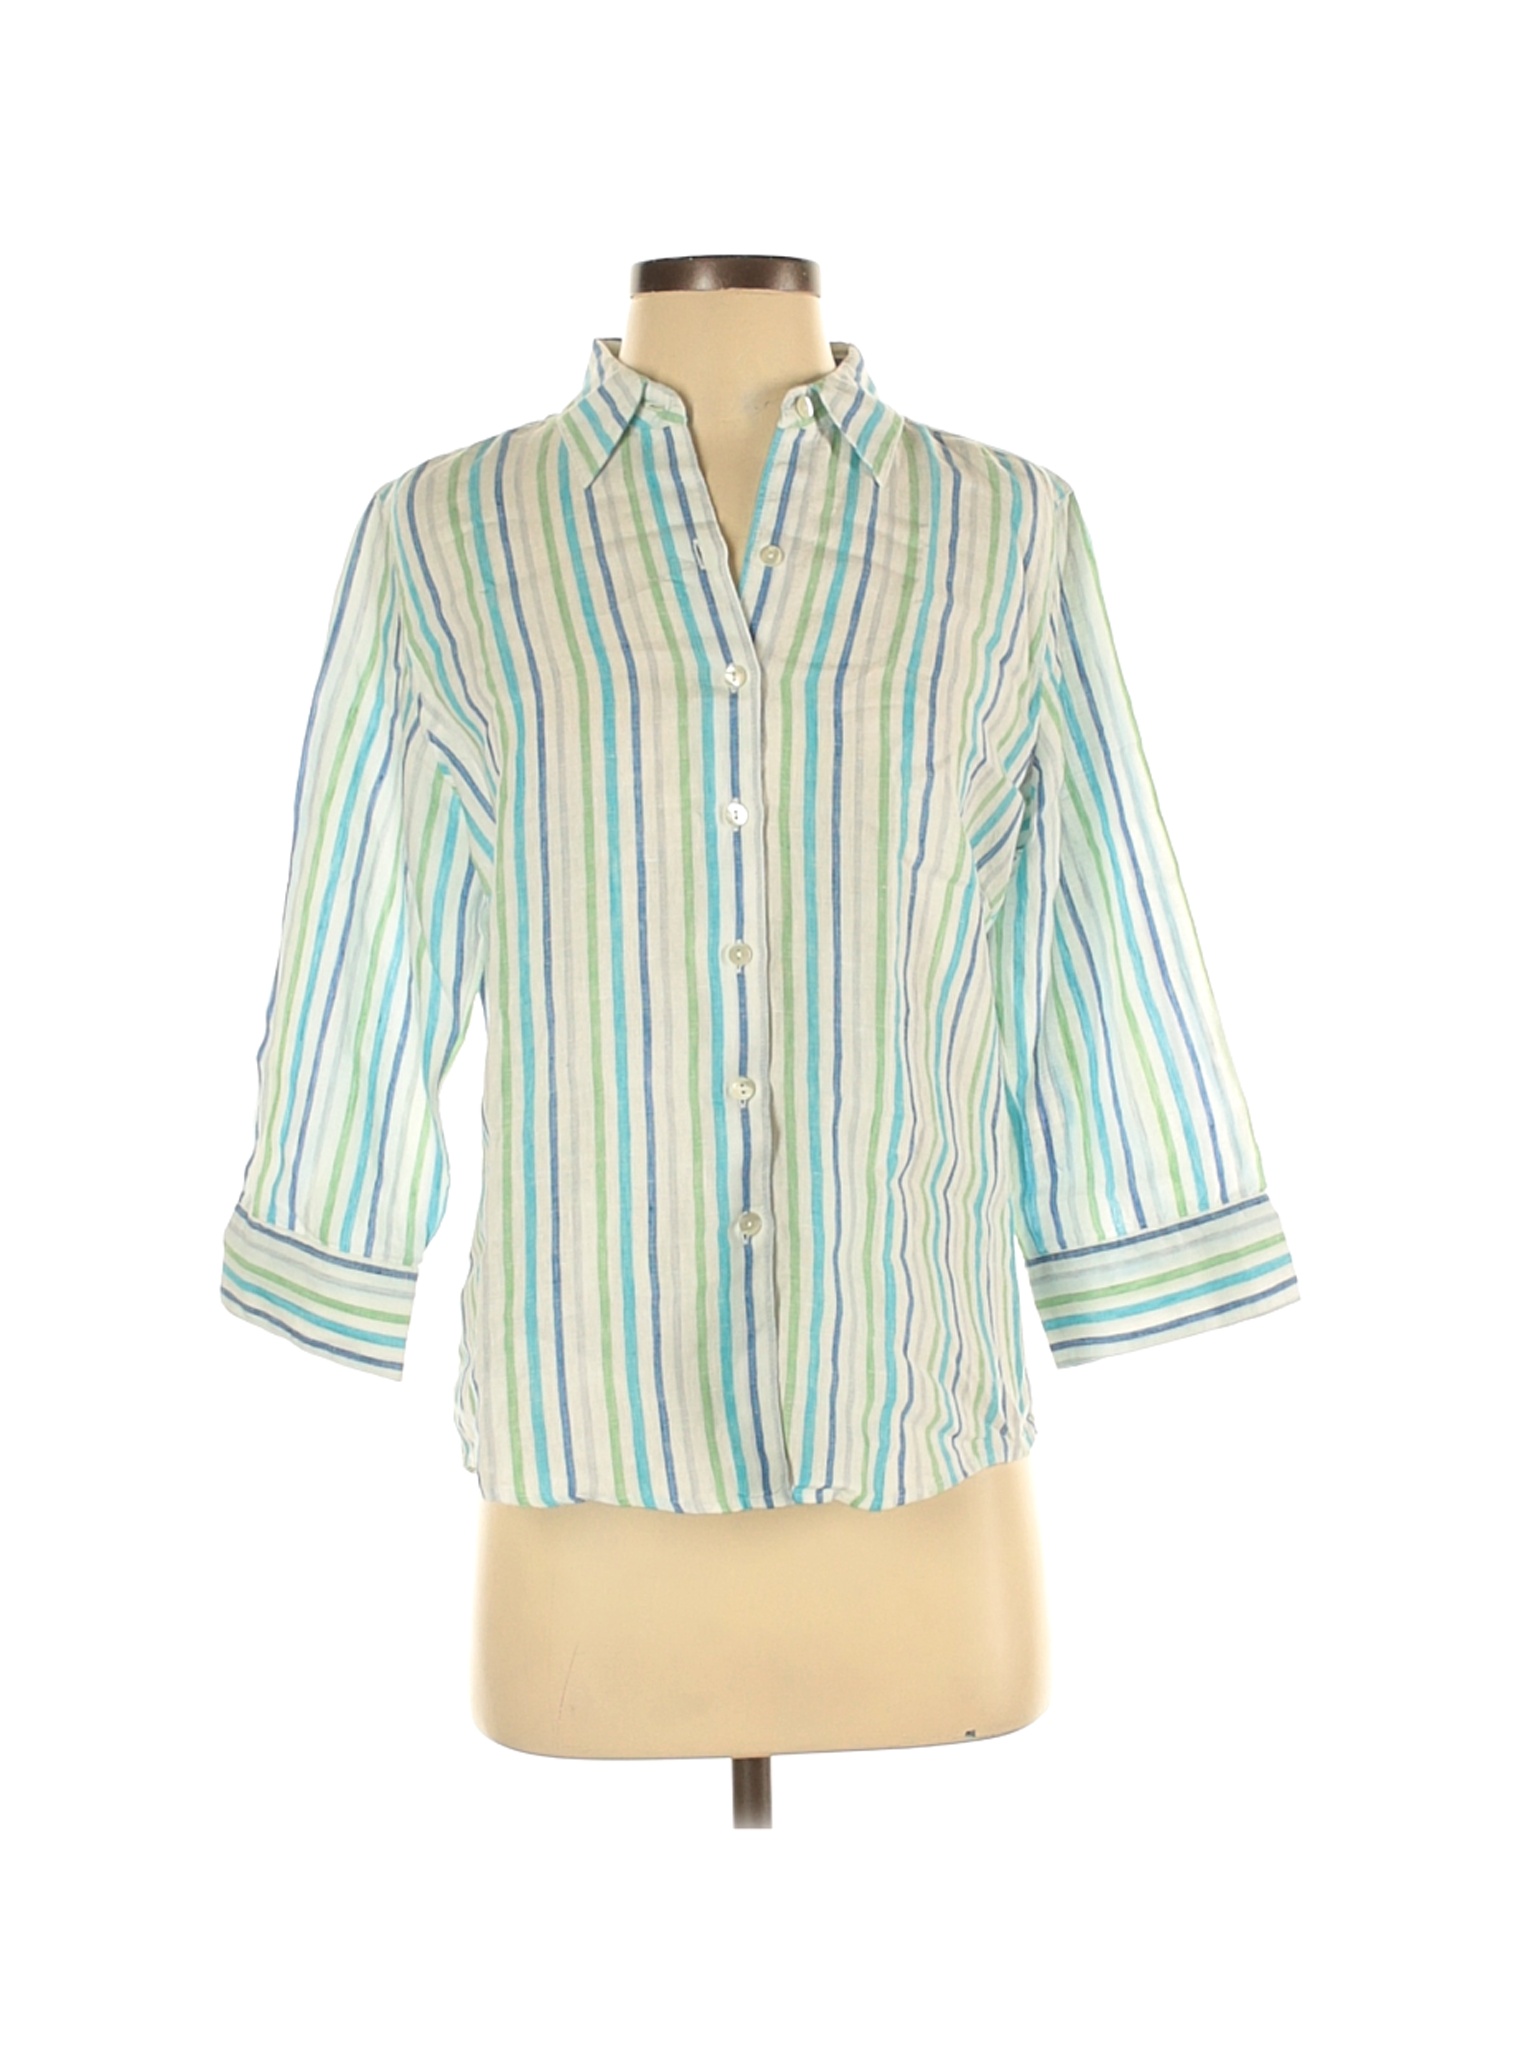 L.L.Bean Women Blue 3/4 Sleeve Button-Down Shirt S | eBay